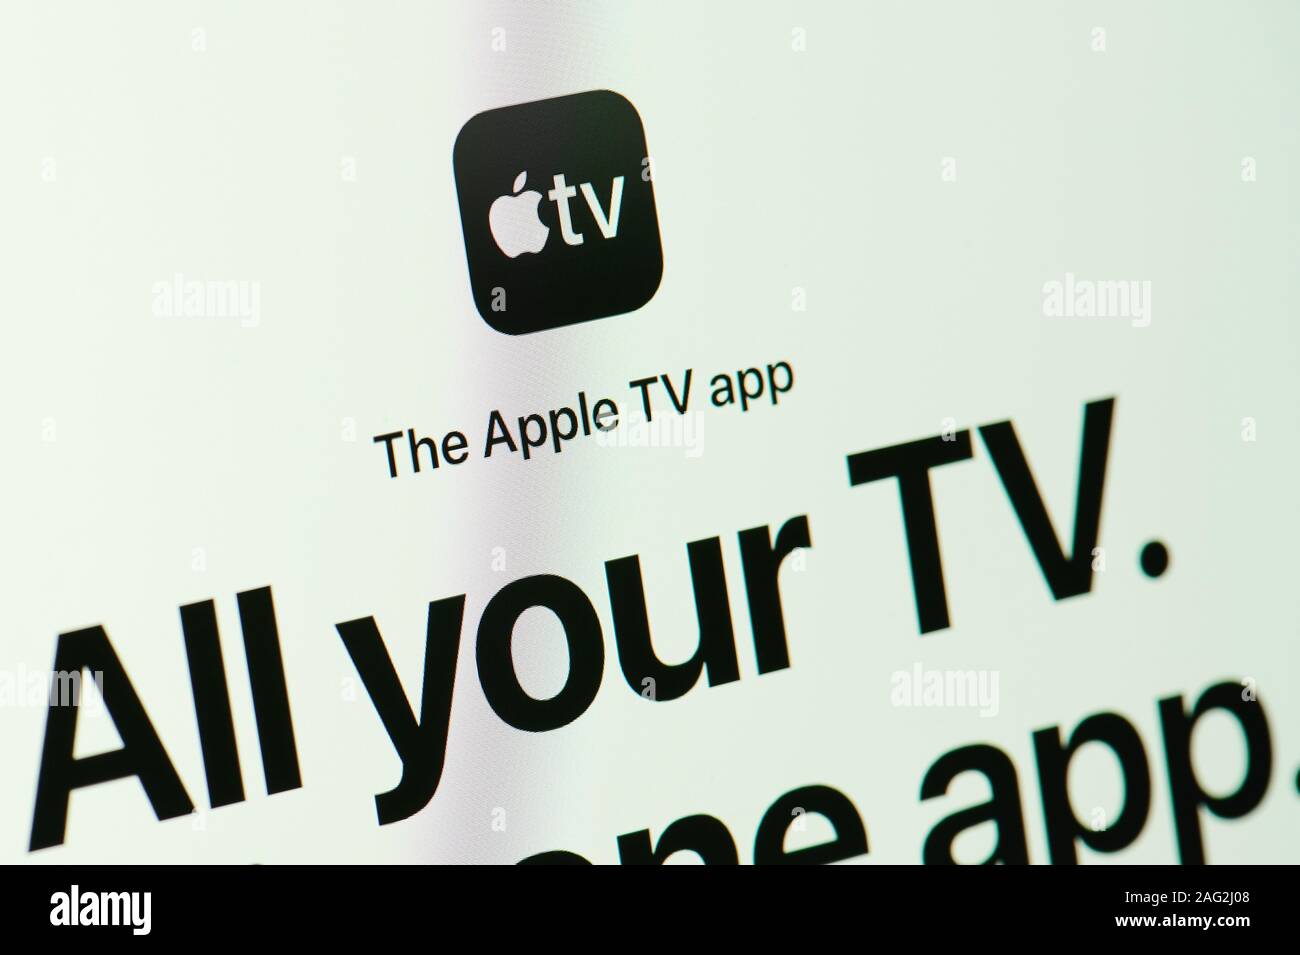 New York, USA - Dezember 17, 2019: Apple tv App Service auf dem Laptop Bildschirm Nähe zu sehen. Stockfoto